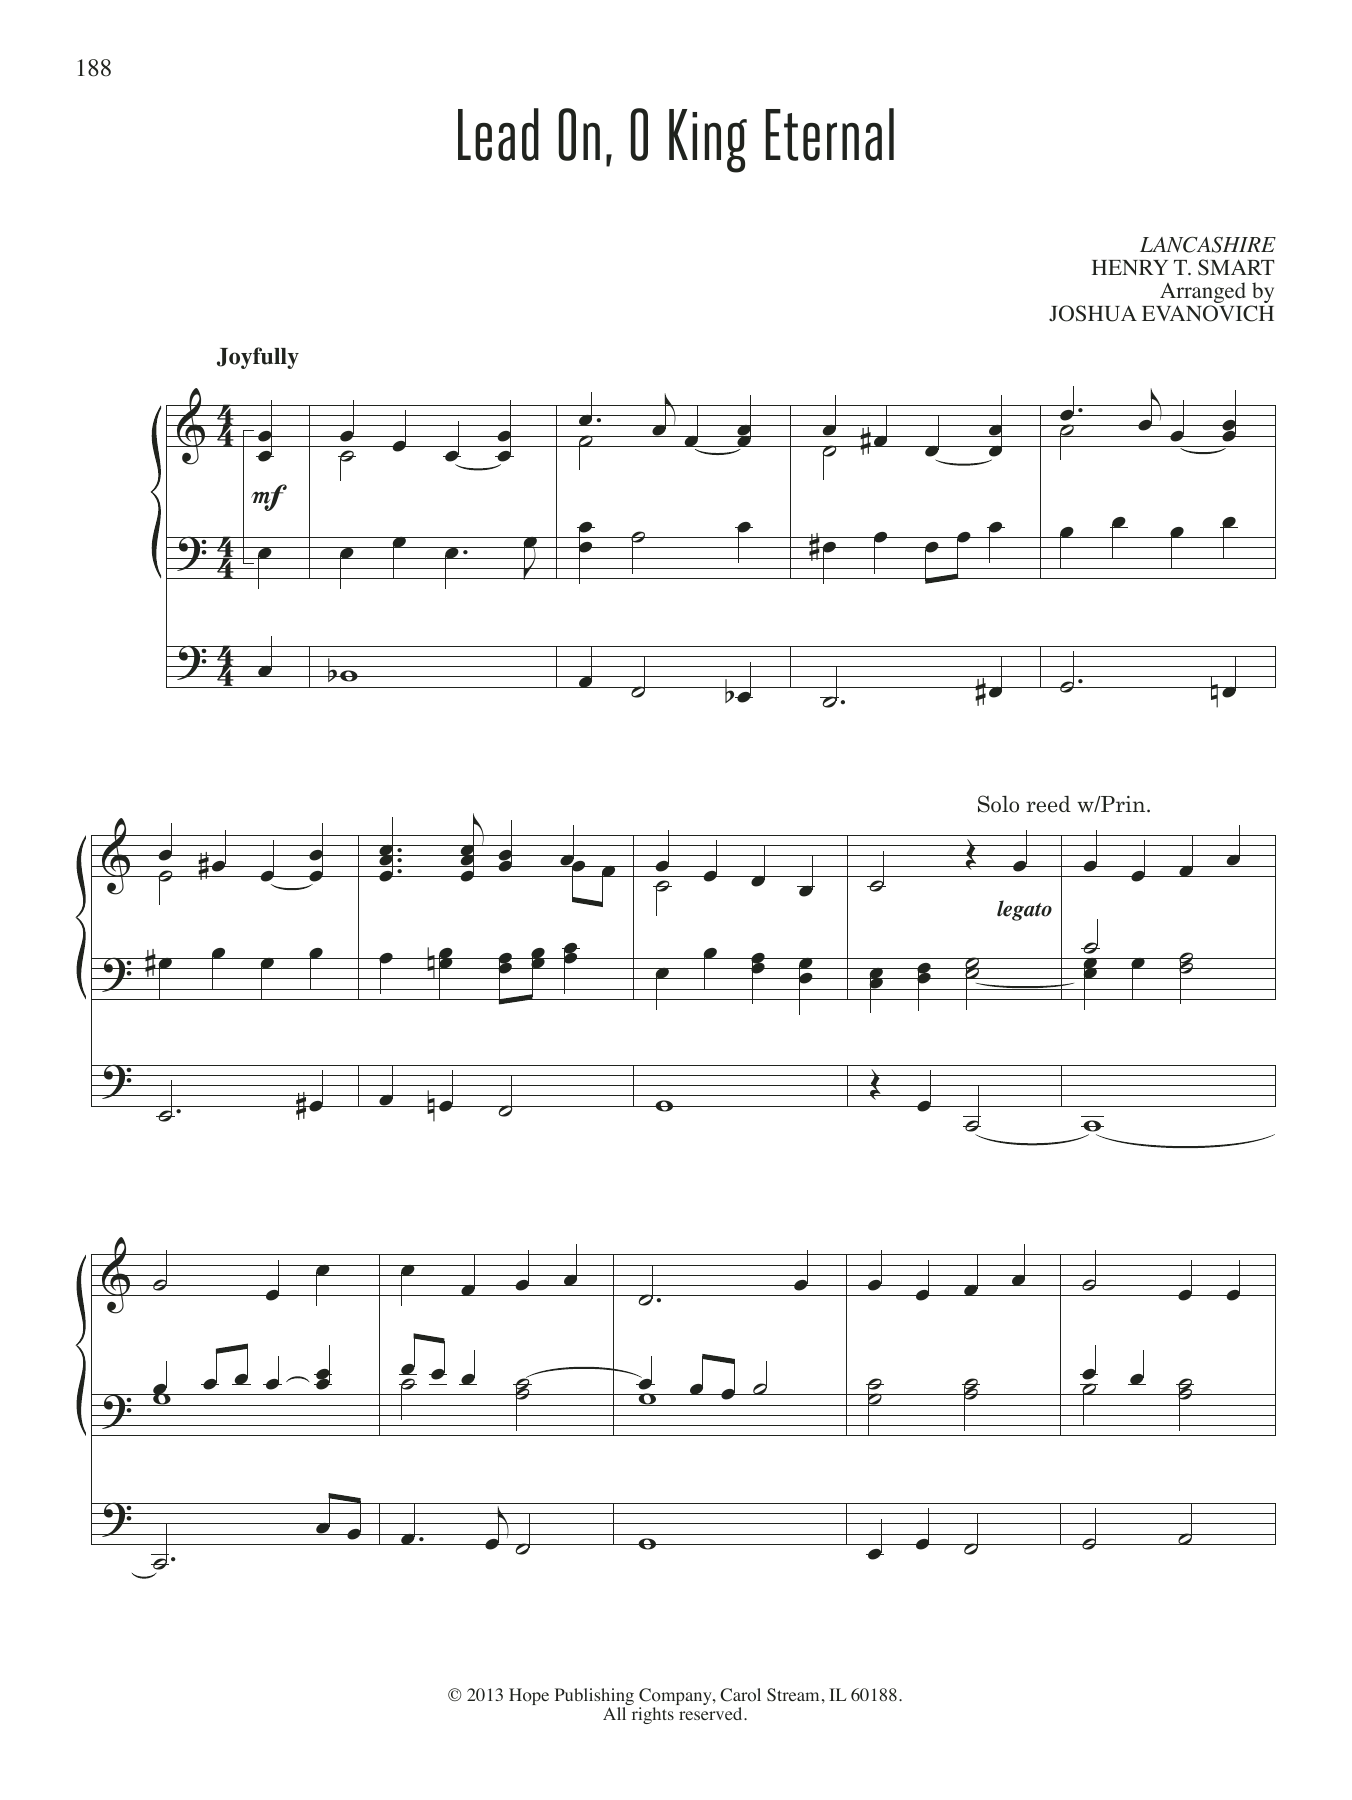 Joshua Evanovich Lead On, O King Eternal Sheet Music Notes & Chords for Organ - Download or Print PDF